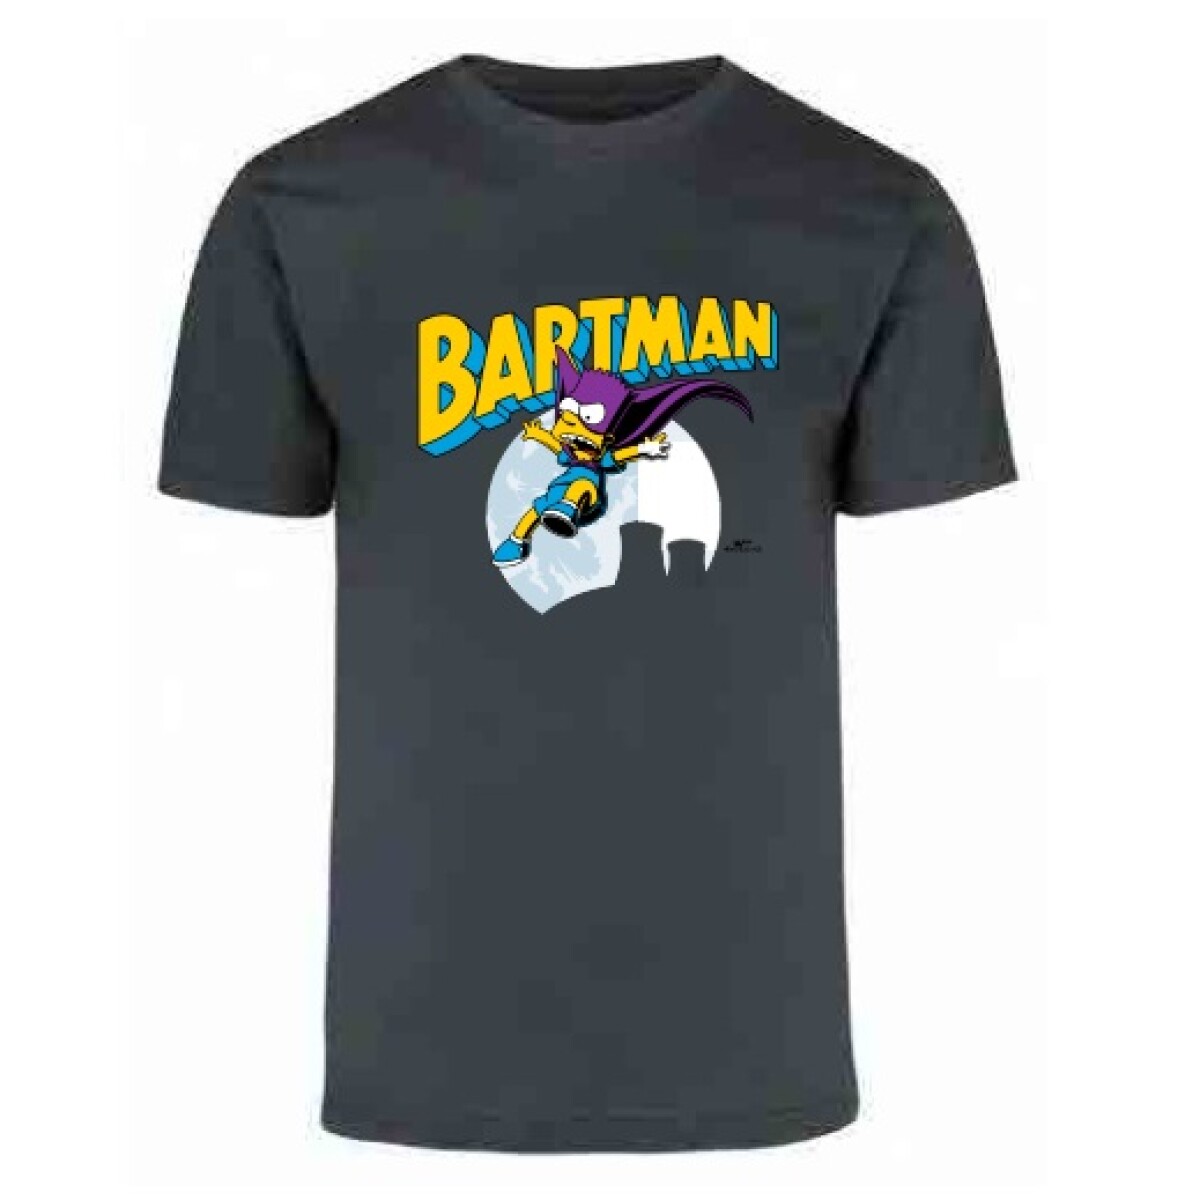 Camiseta Remera a la Base Simpsons Bartman - GRIS-OSCURO 